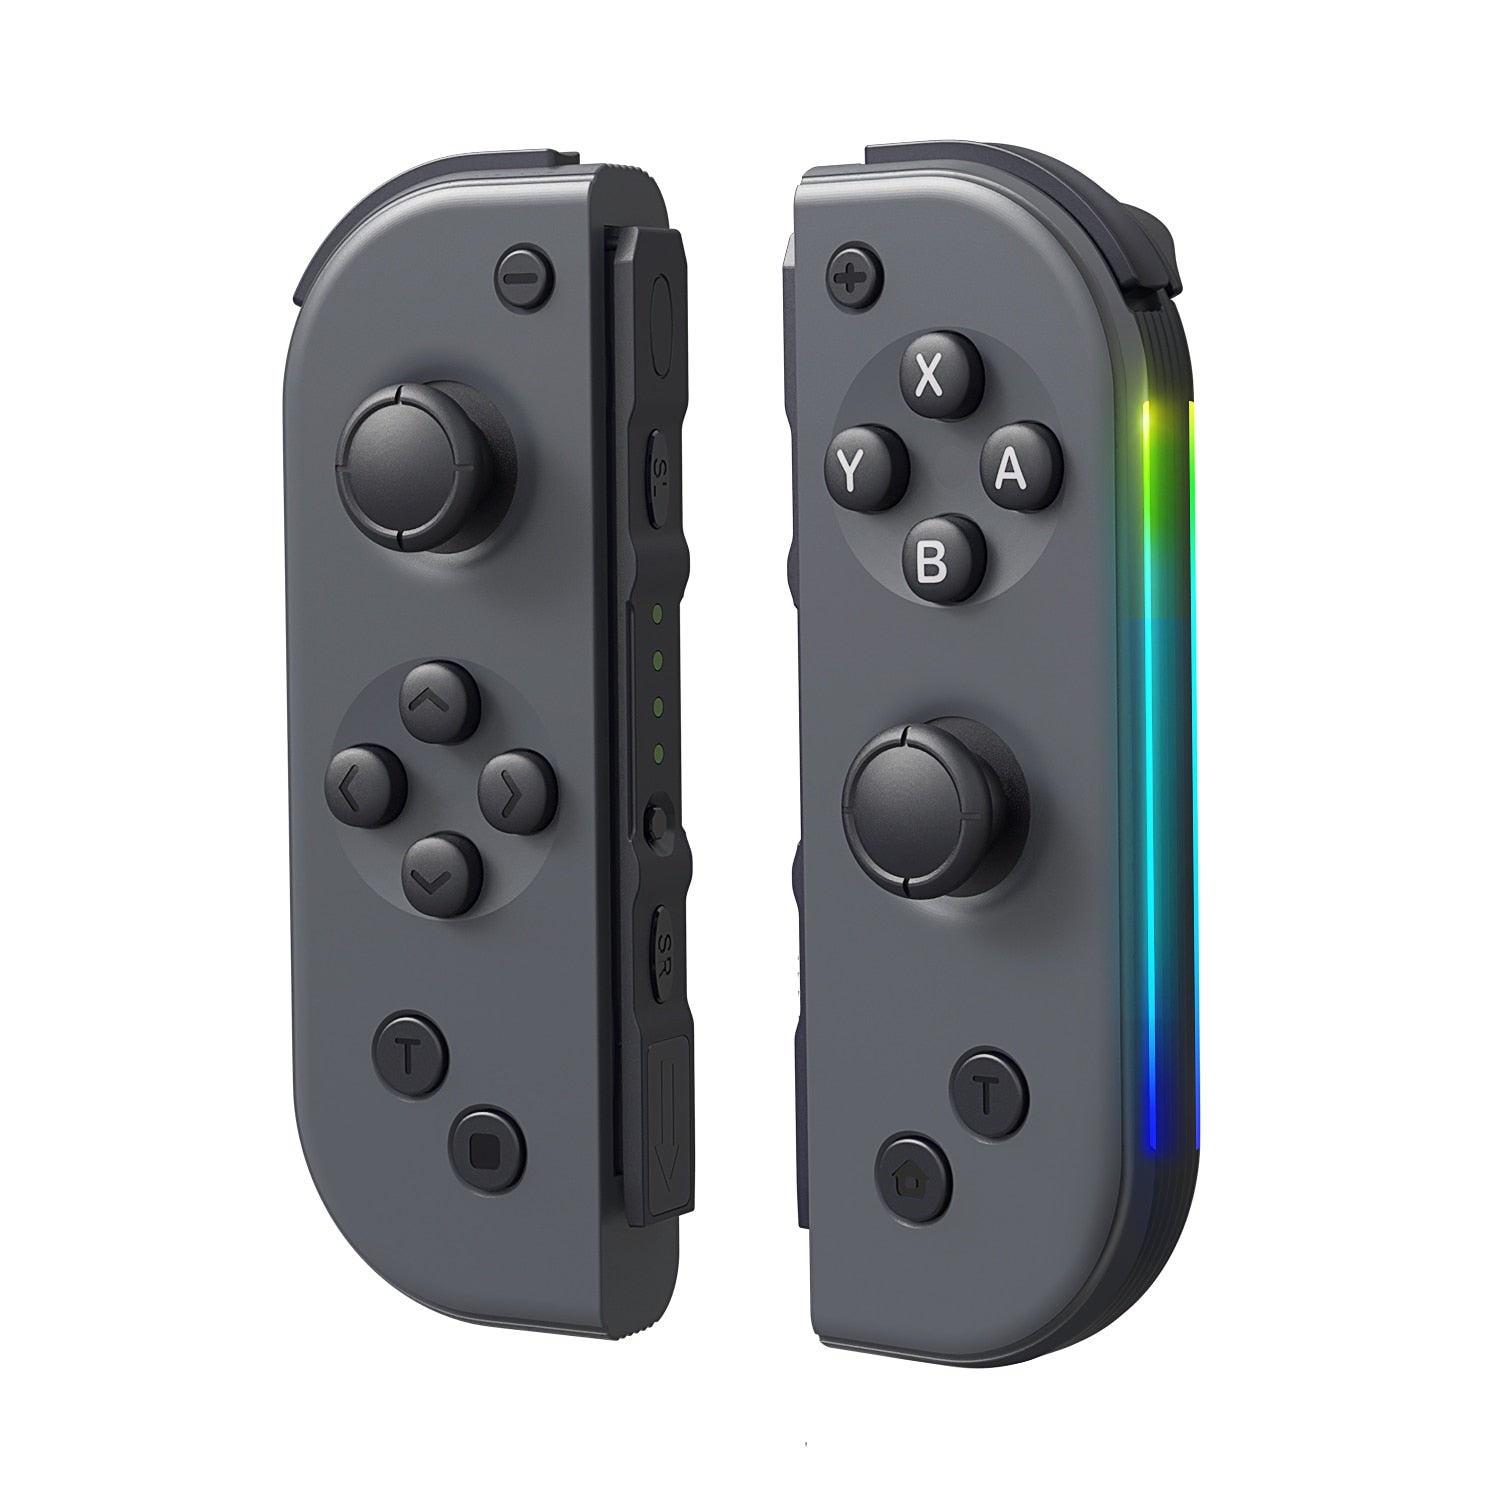 Nintendo Switch Joy-Con - Gray